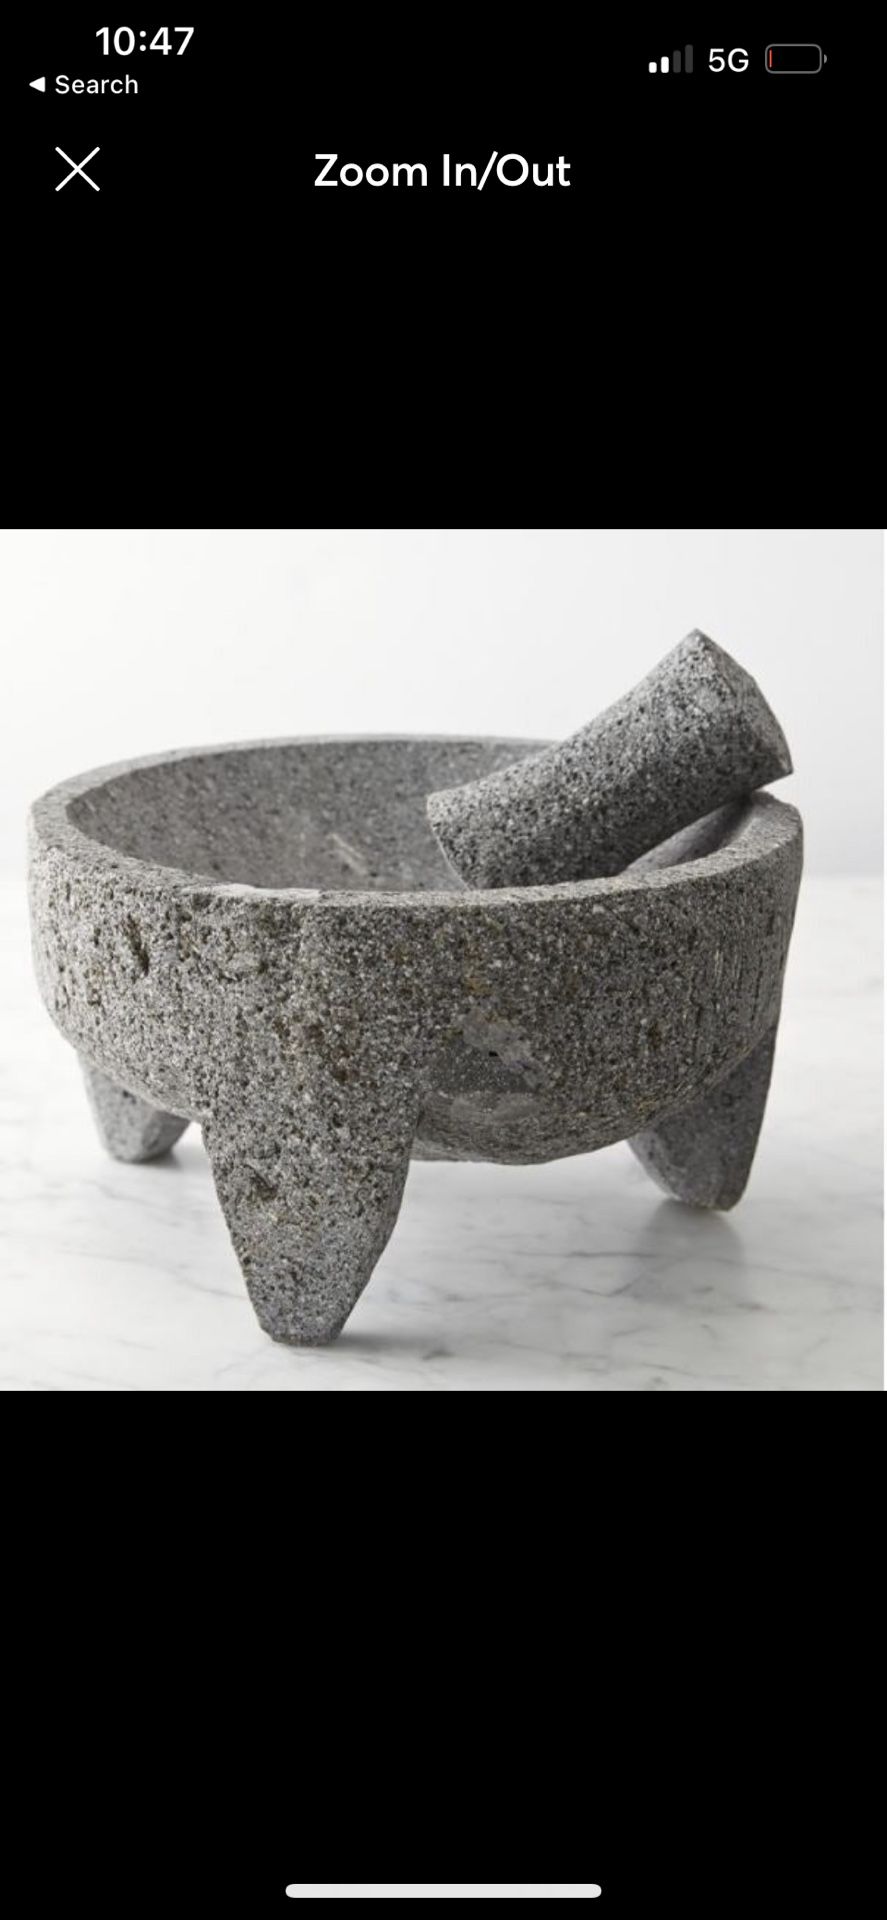 William Senoma - Molcajete, 8” Guac Mixing Bowl - Grinding Stone